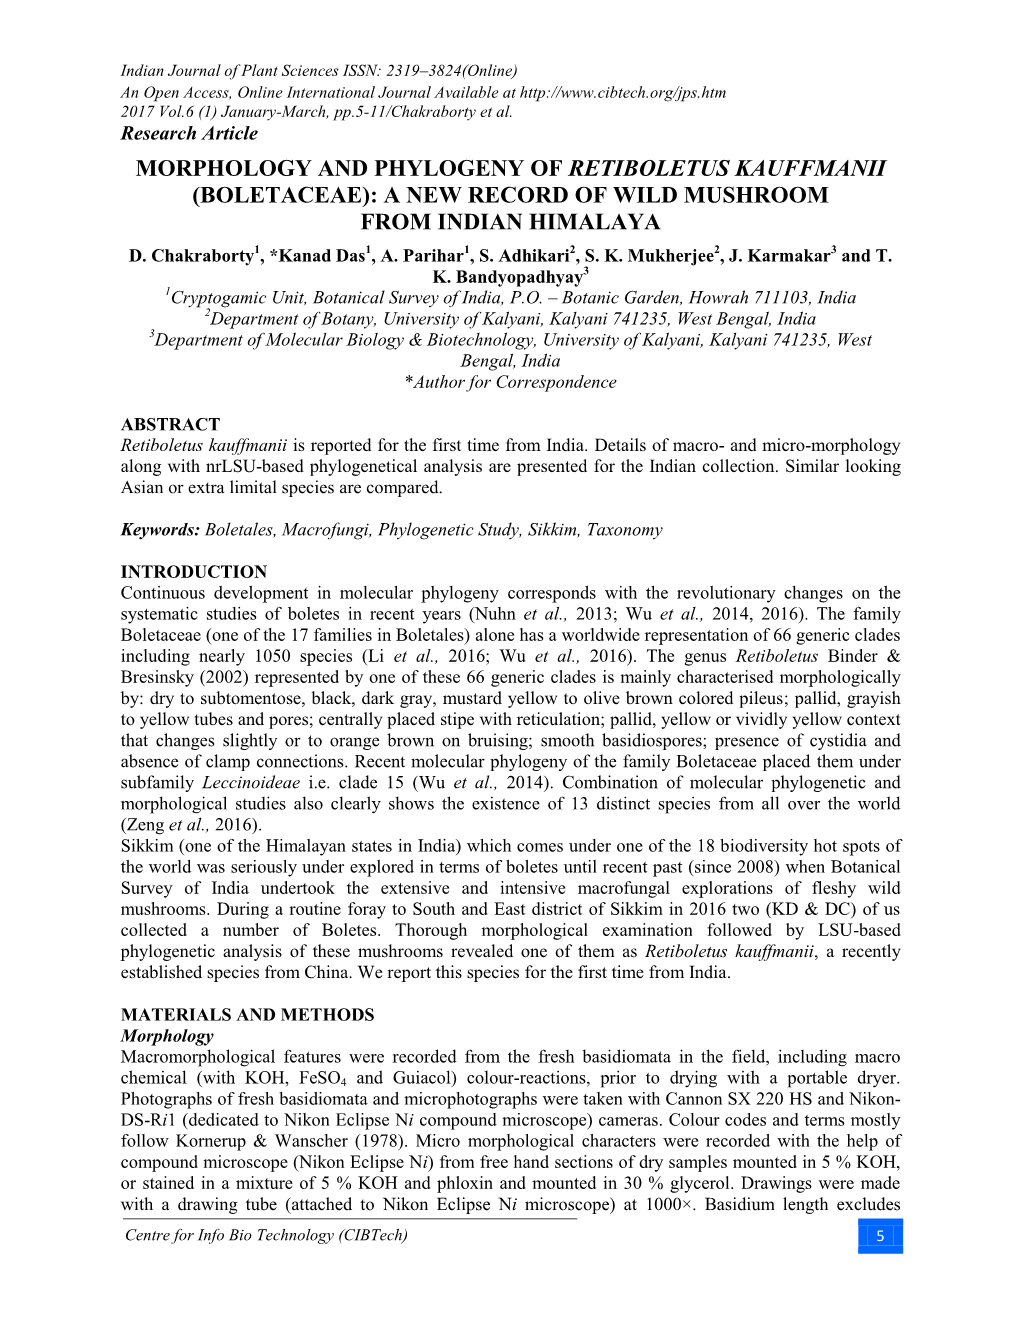 Morphology and Phylogeny of Retiboletus Kauffmanii (Boletaceae): a New Record of Wild Mushroom from Indian Himalaya D